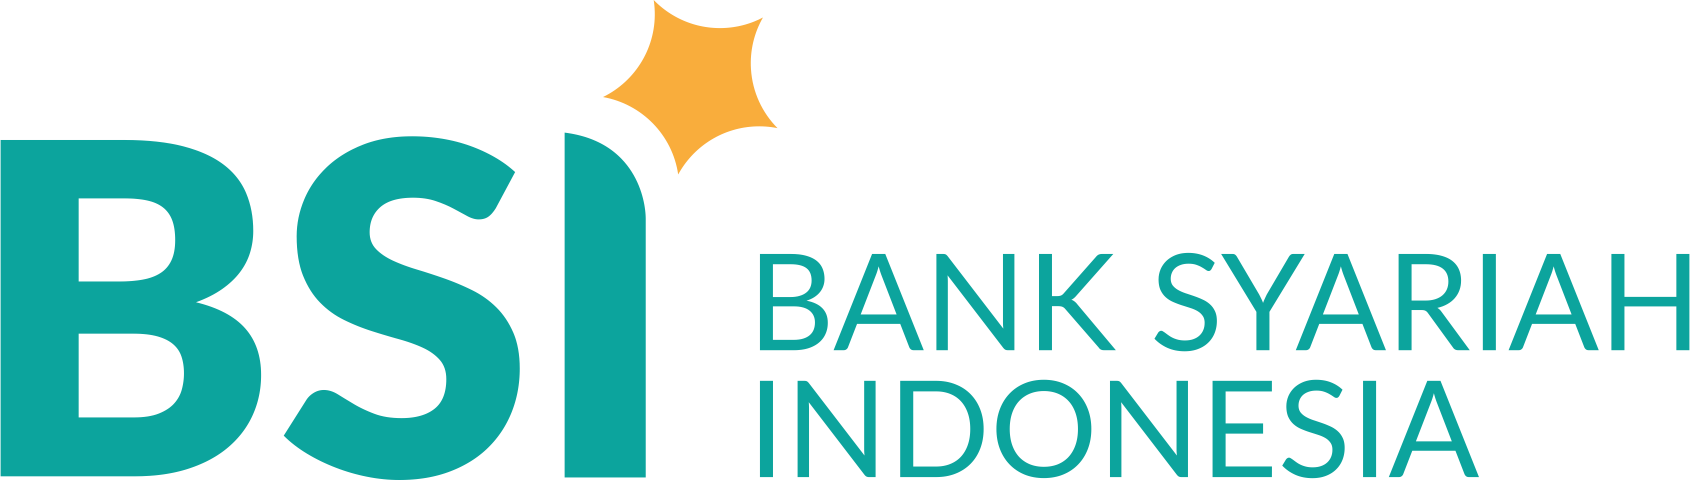 BSI (Bank Syariah Indonesia) Logo (PNG480p) - Vector69Com